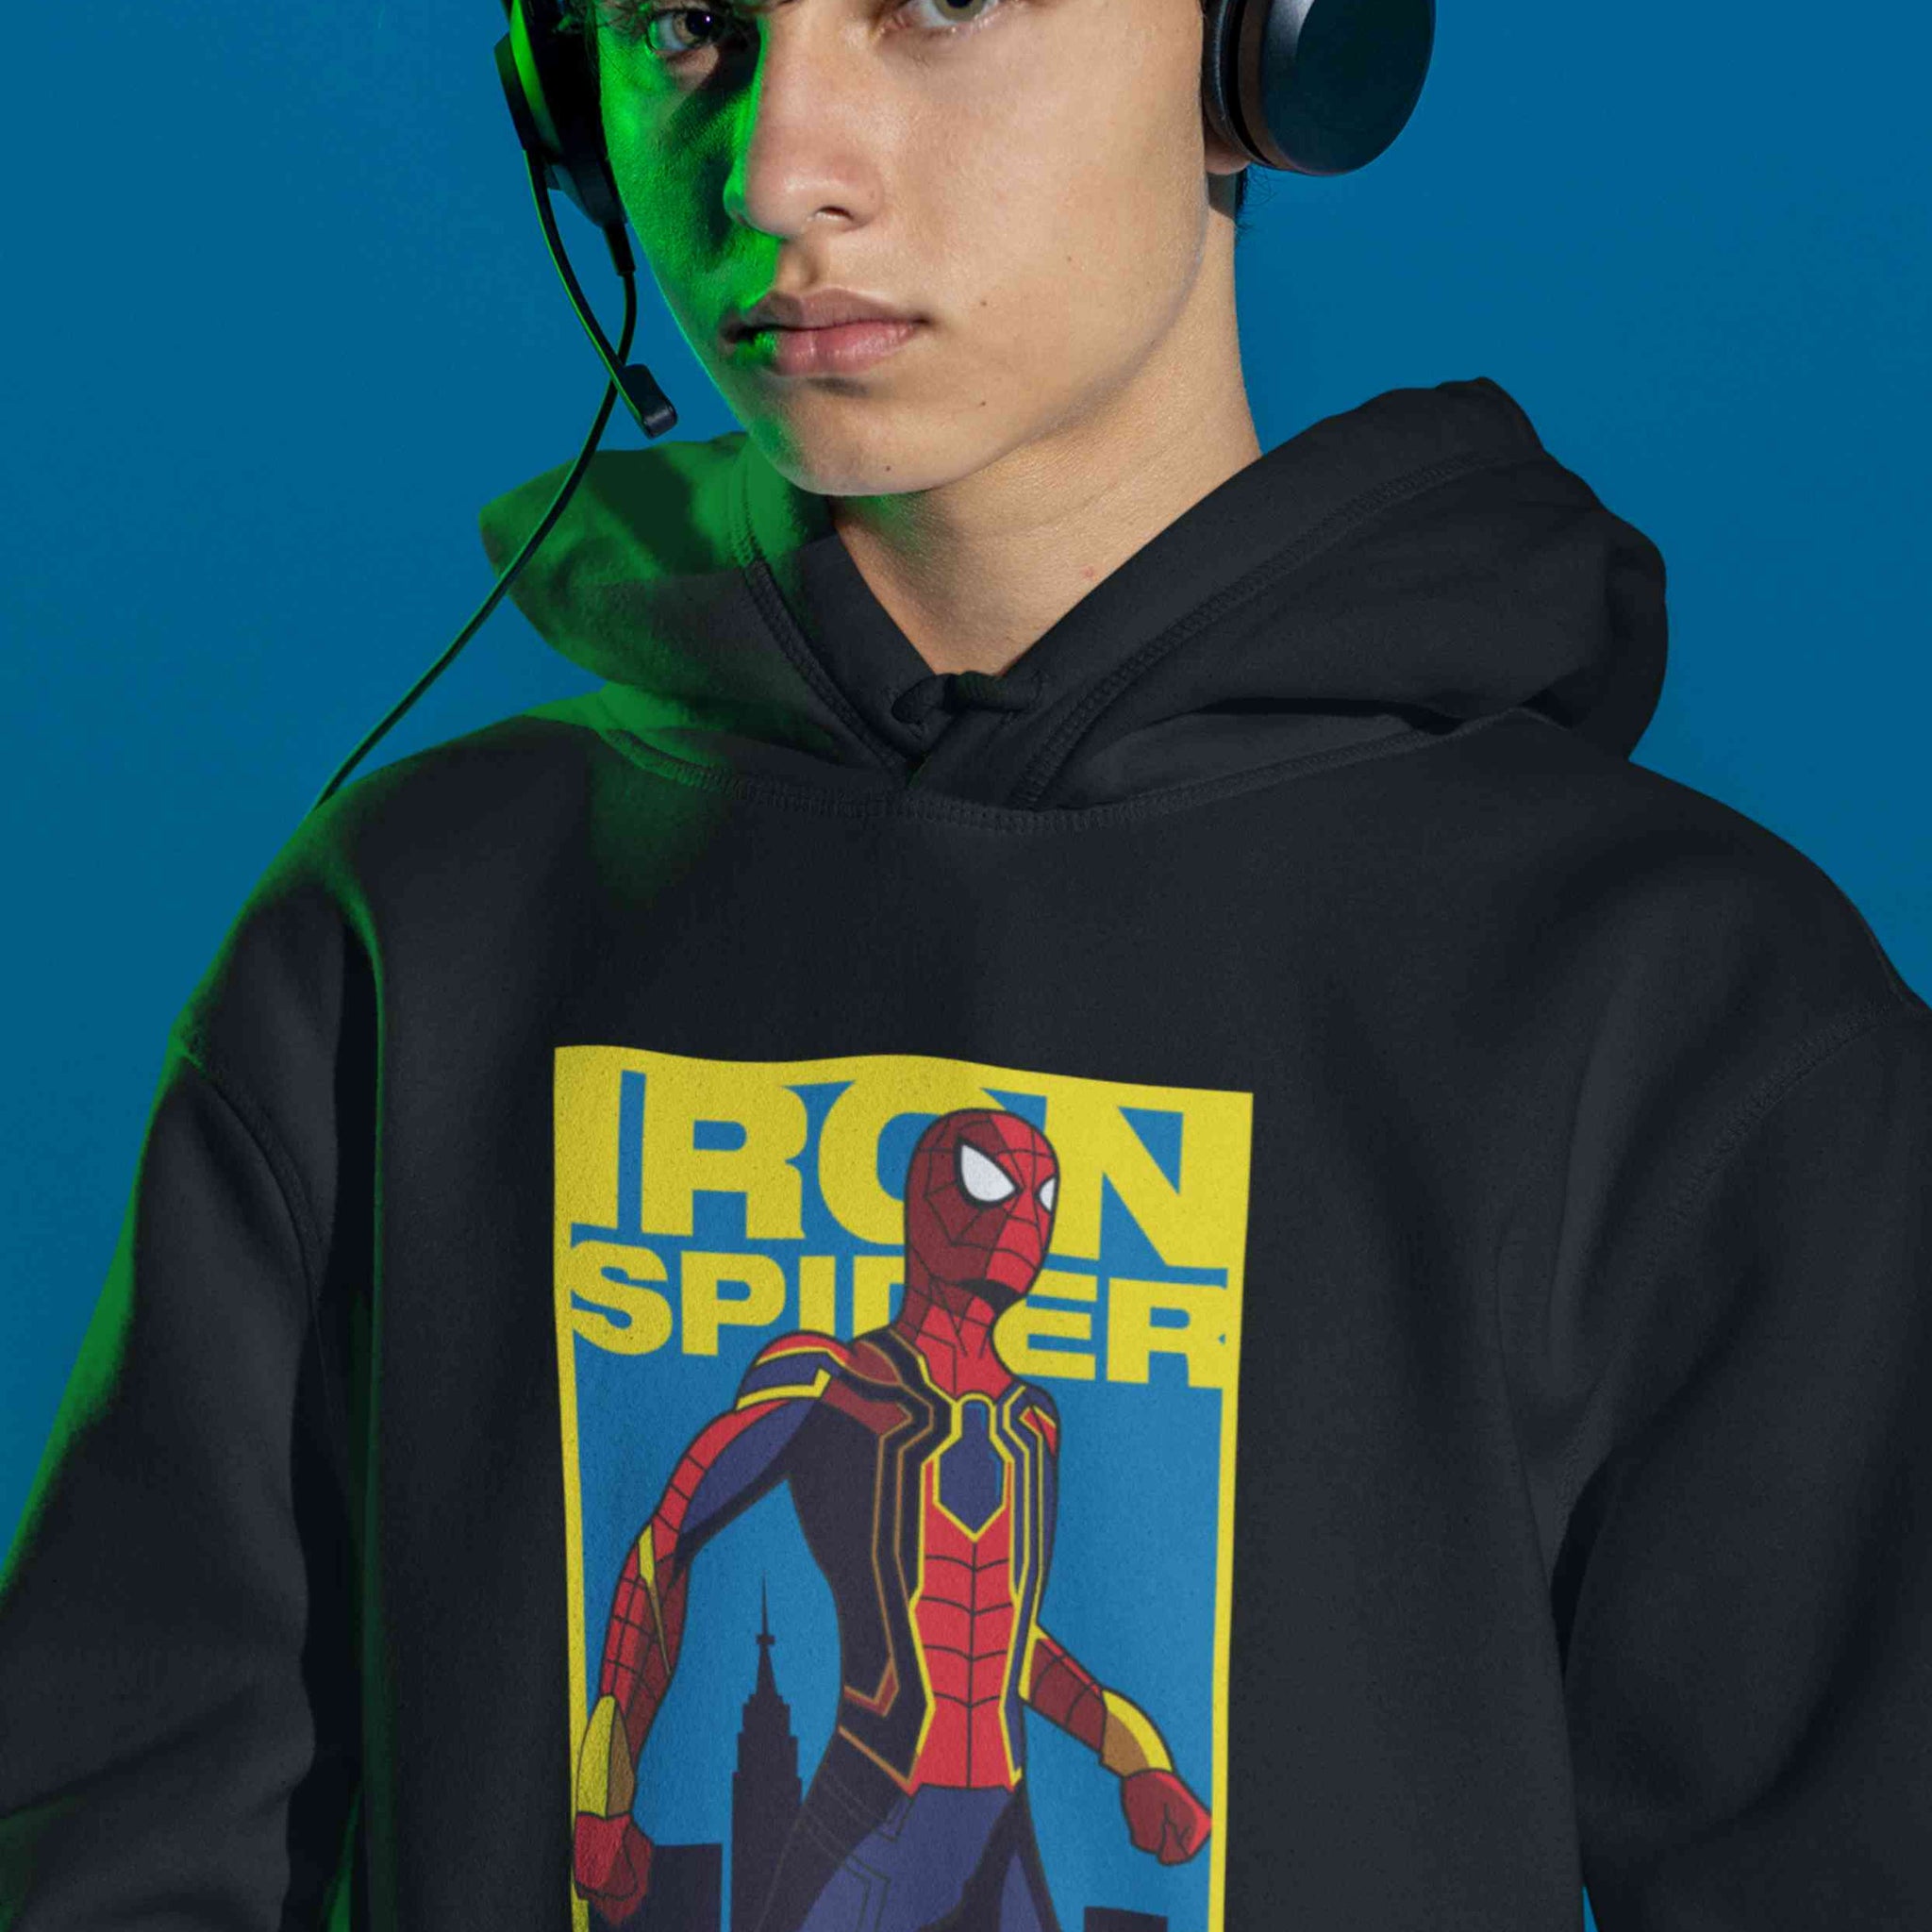 Iron Spiderman Unisex Hoodie